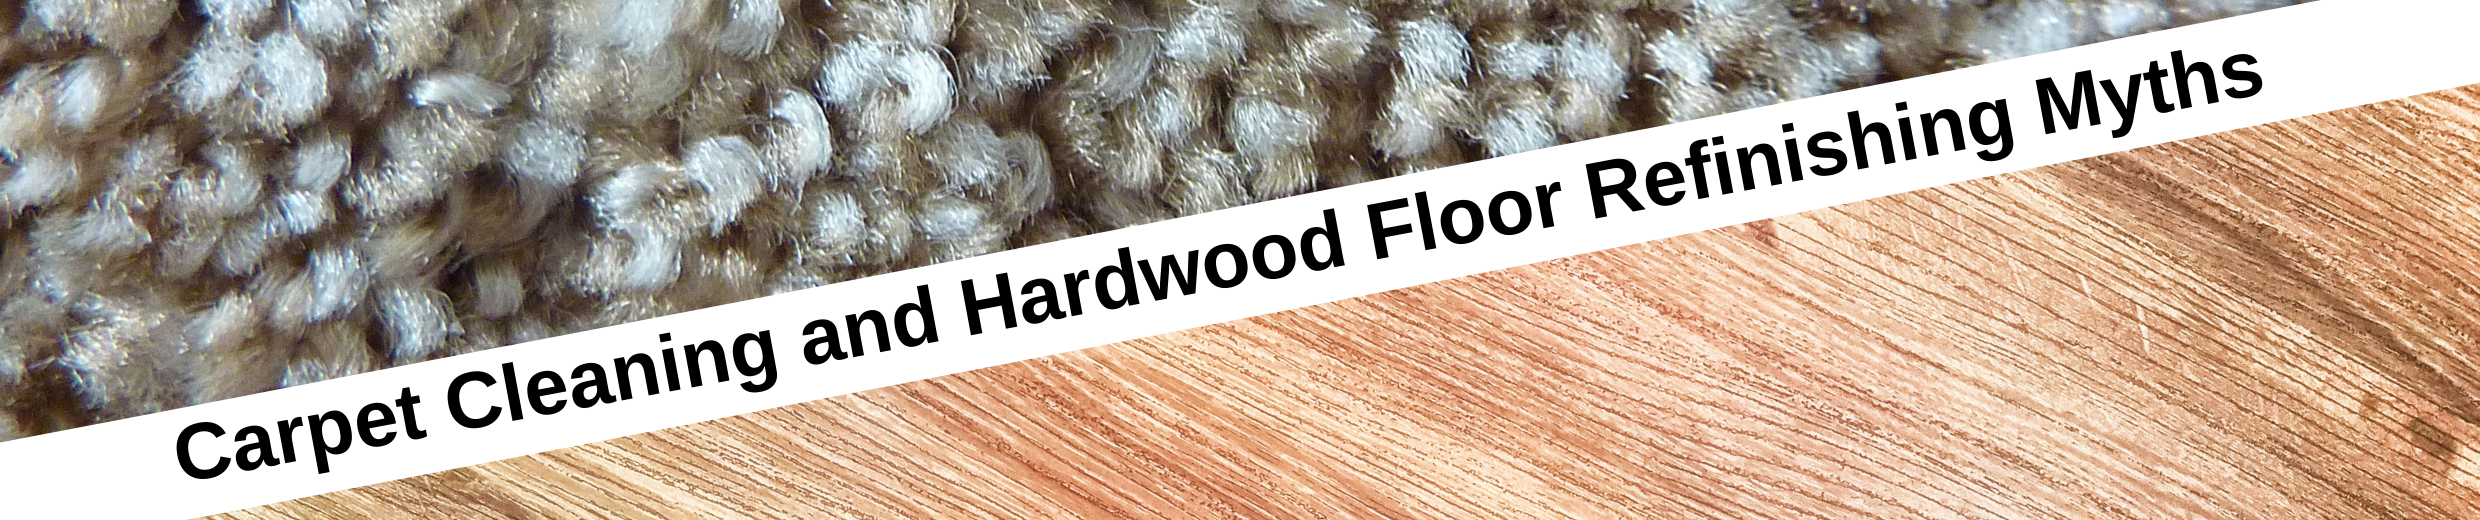 Carpet Cleaning and Hardwood Floor Refinishing Myths